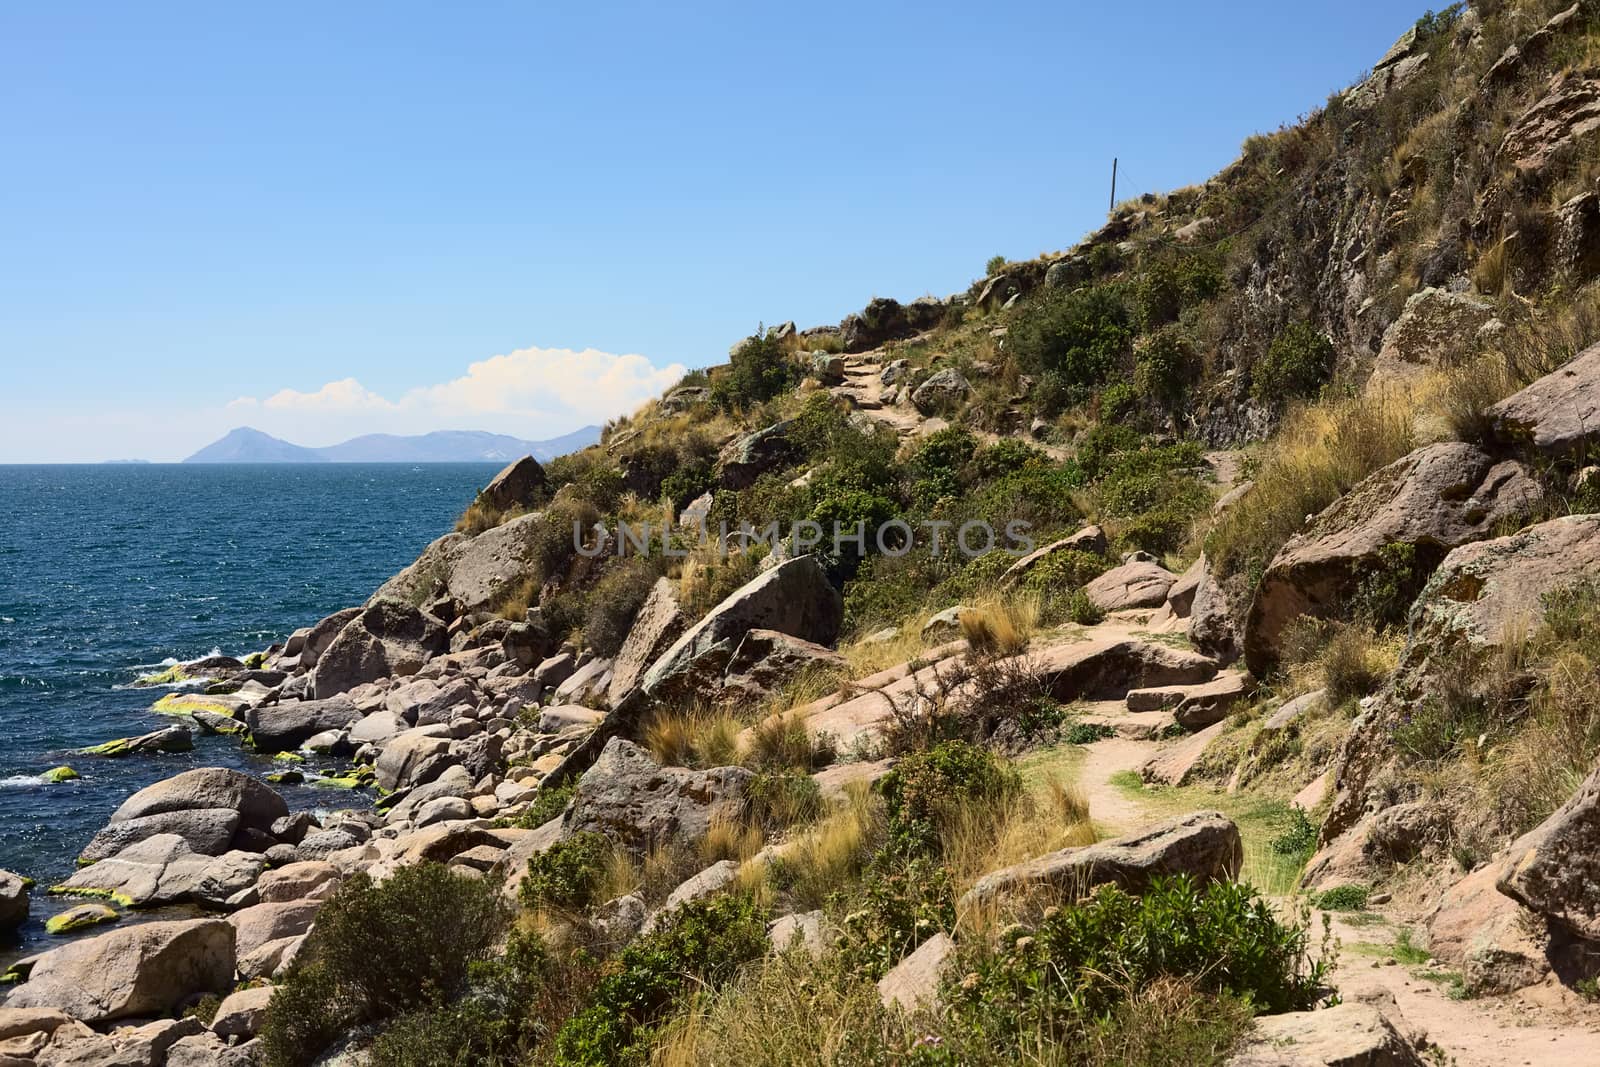 Rocky coastline of Lake Titicaca close to the small tourist town of Copacabana in Bolivia